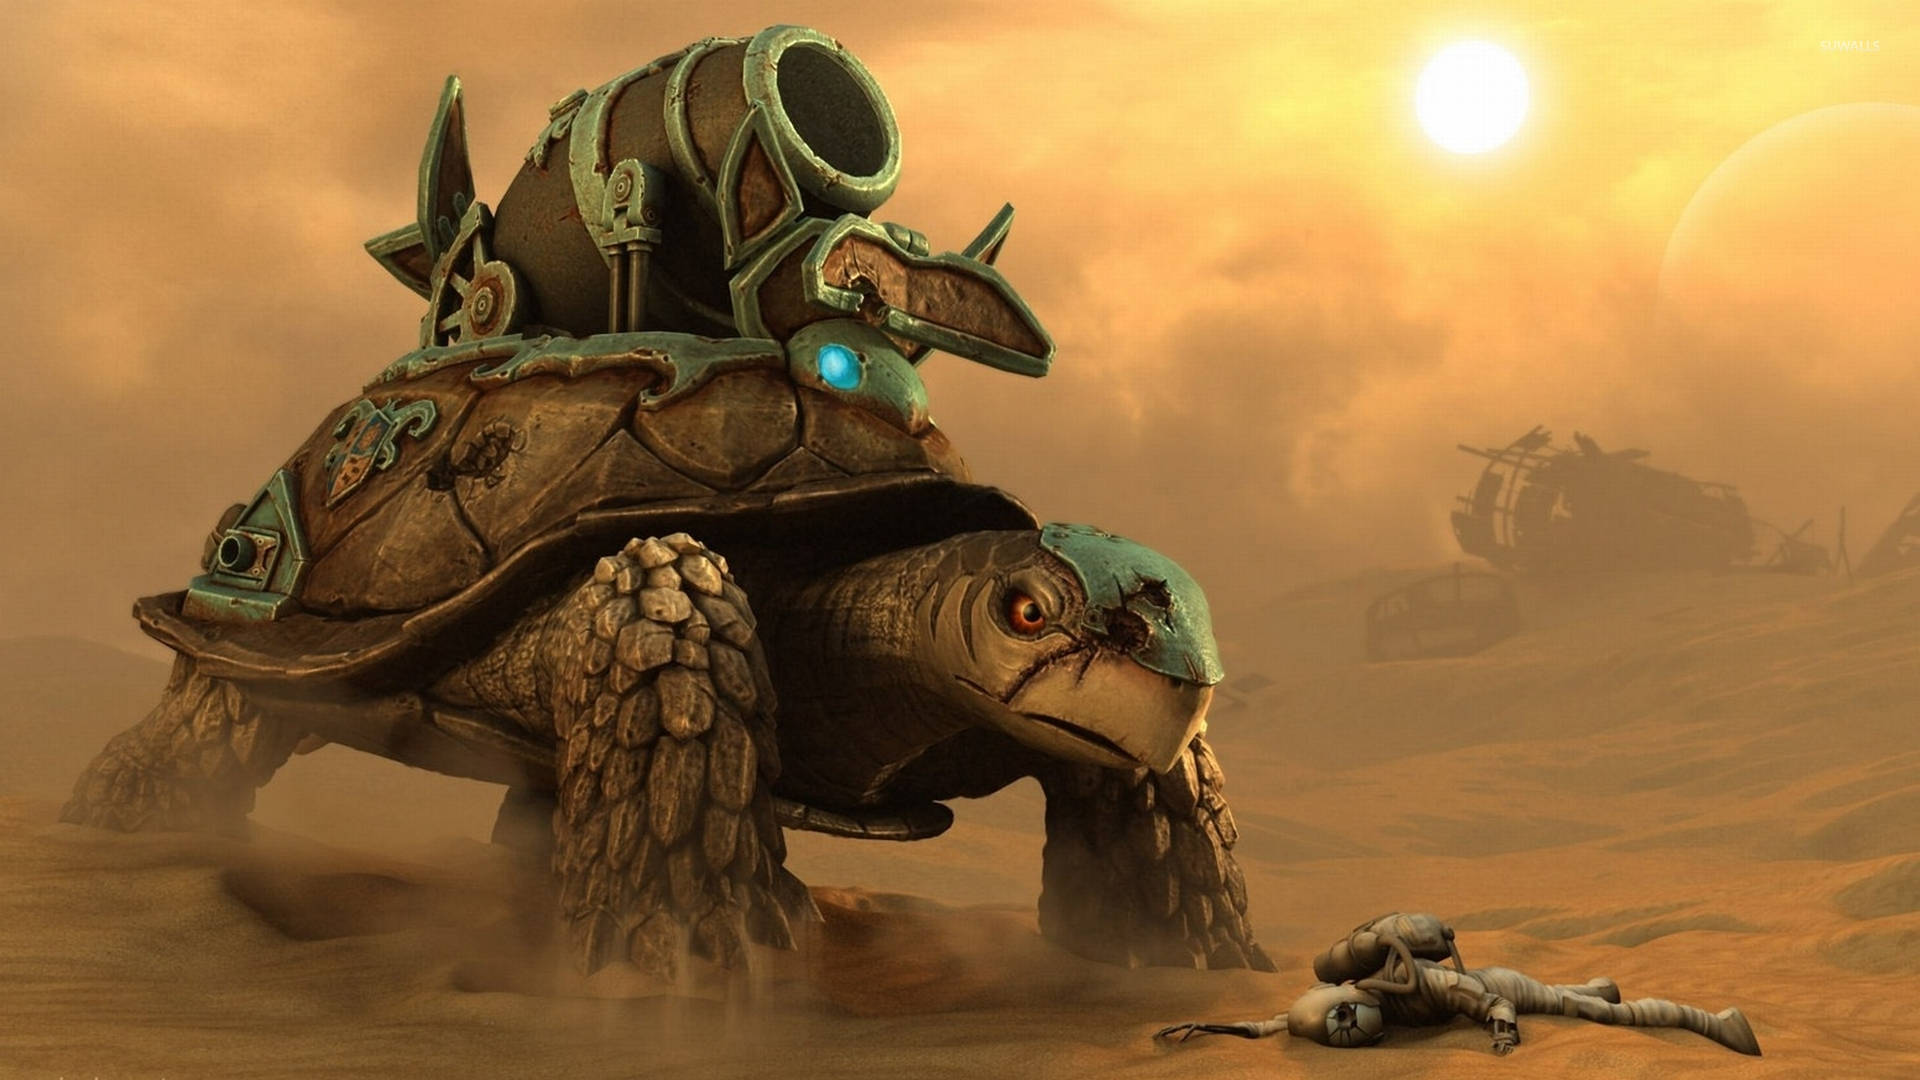 Cool Turtle Fantasy In Desert Wallpaper